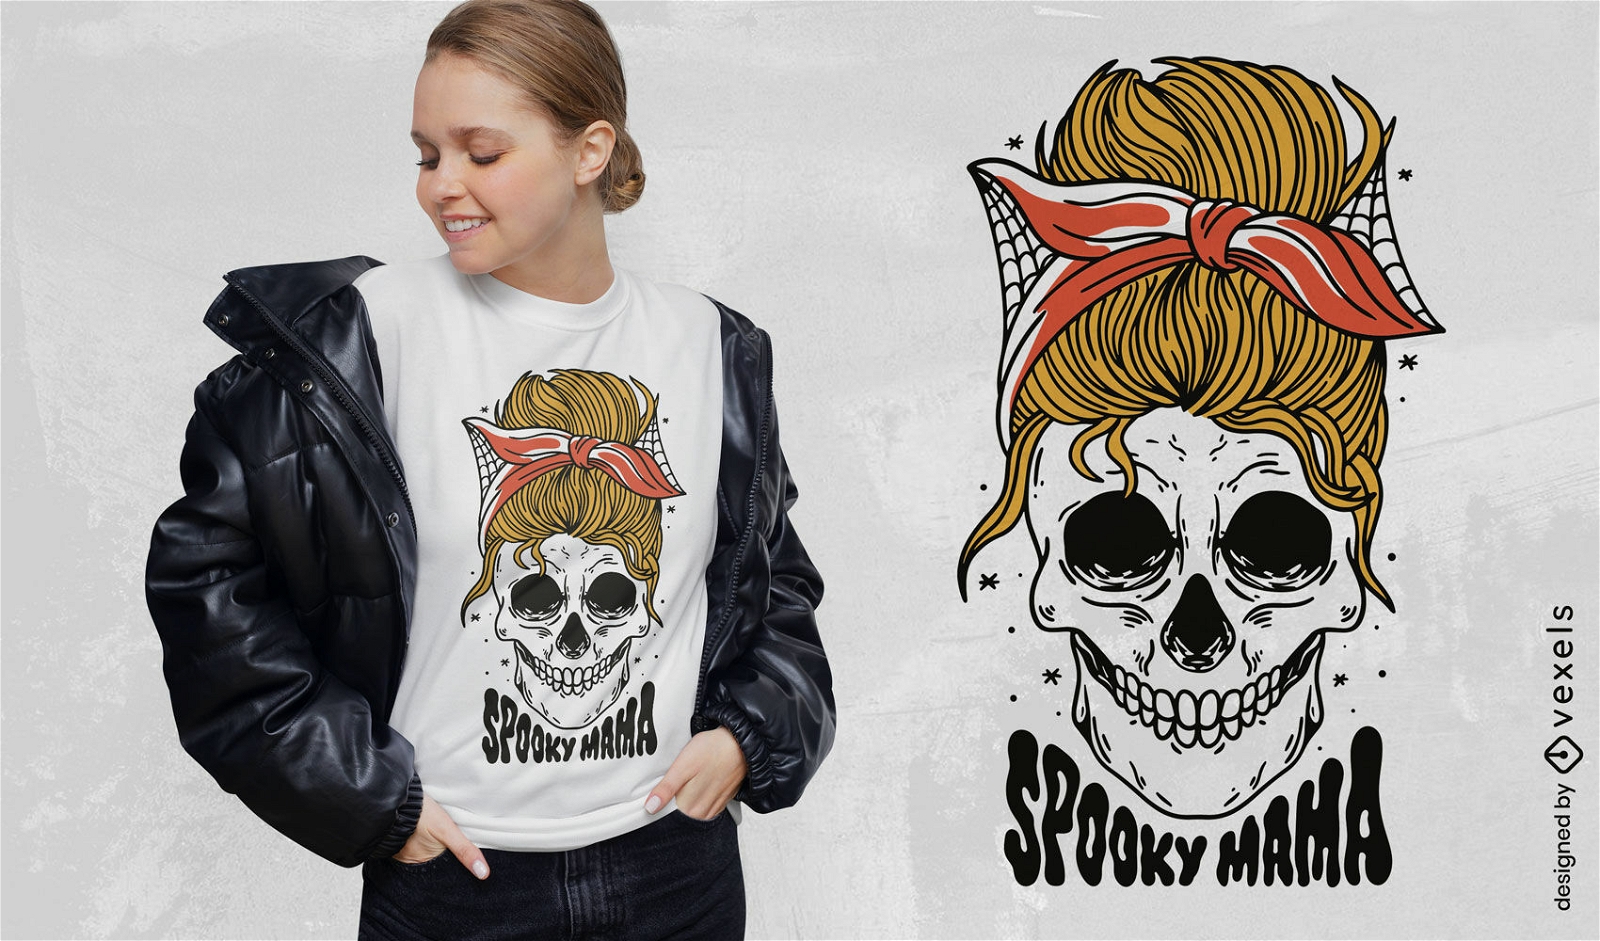 Spooky mama skull t-shirt design